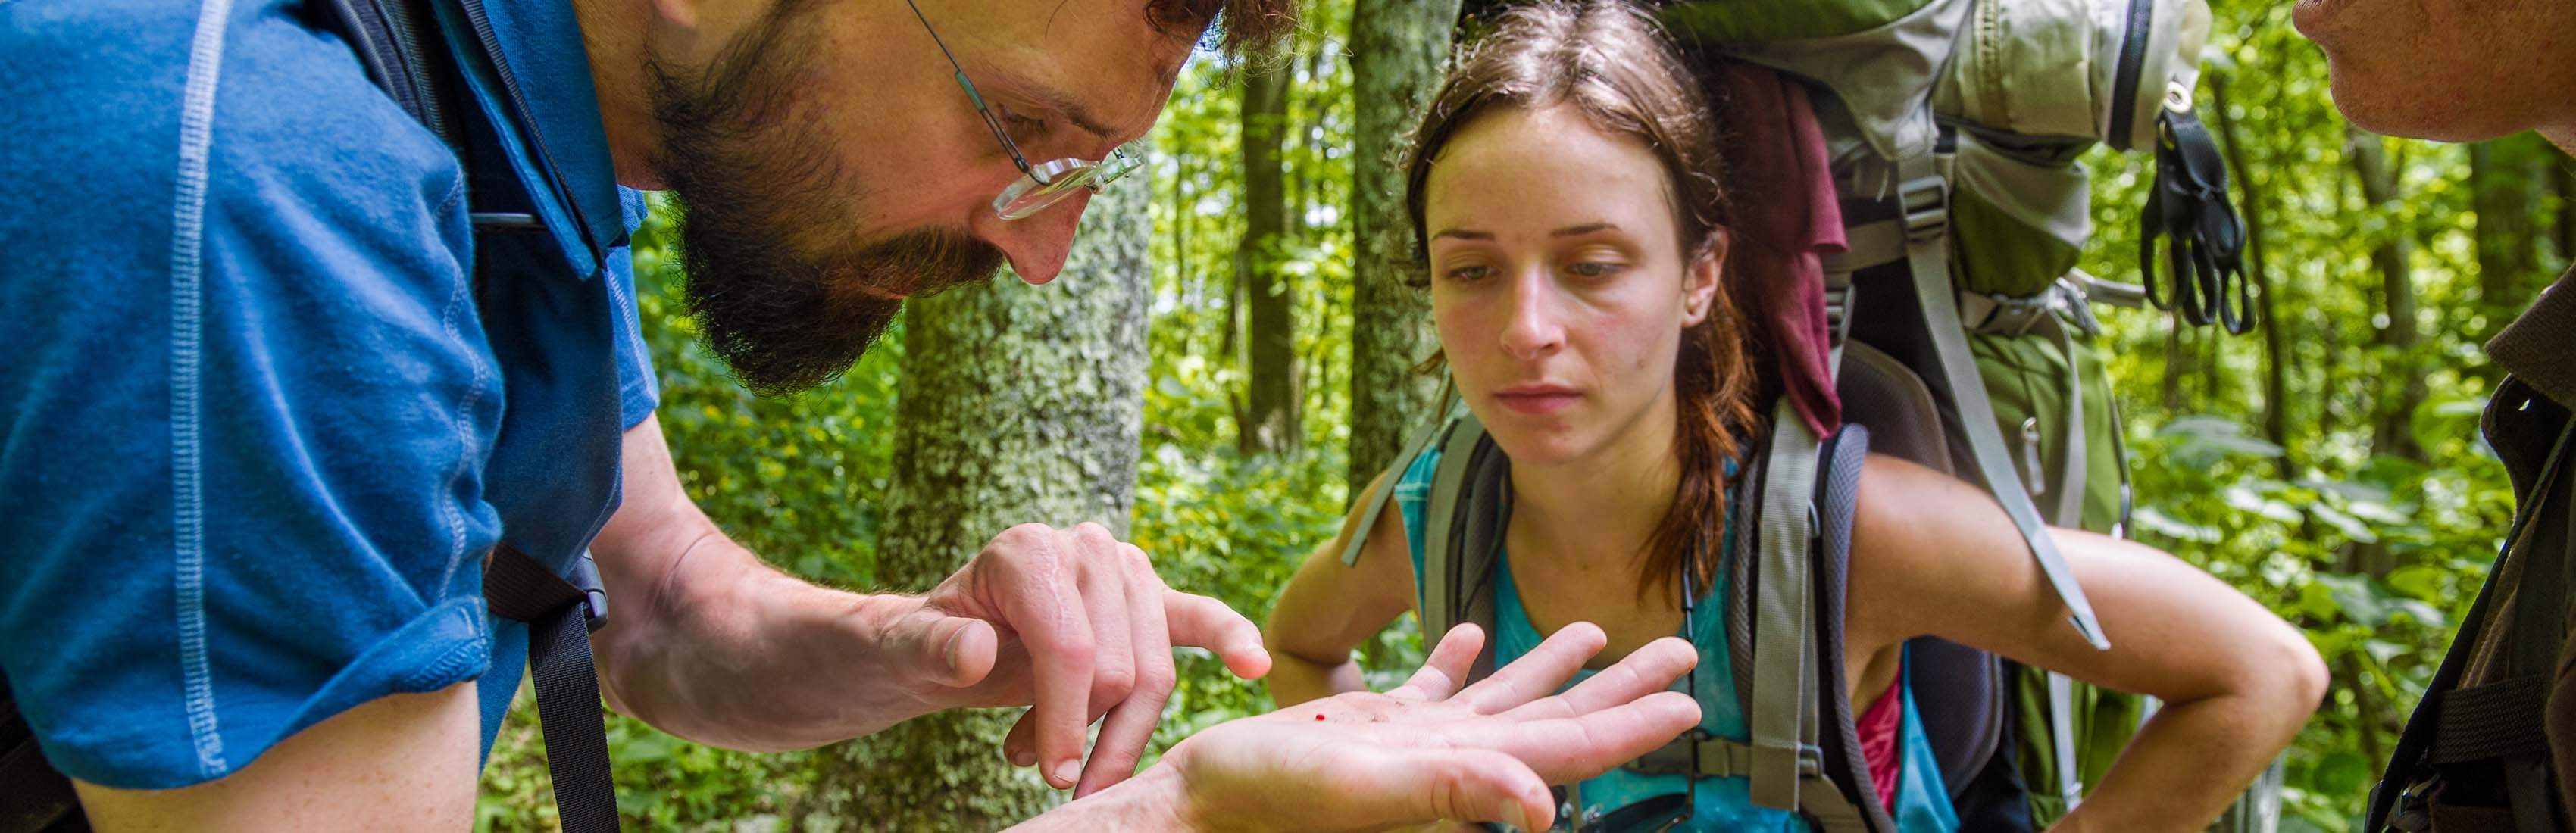 Professor and student examining specimen during nature hike